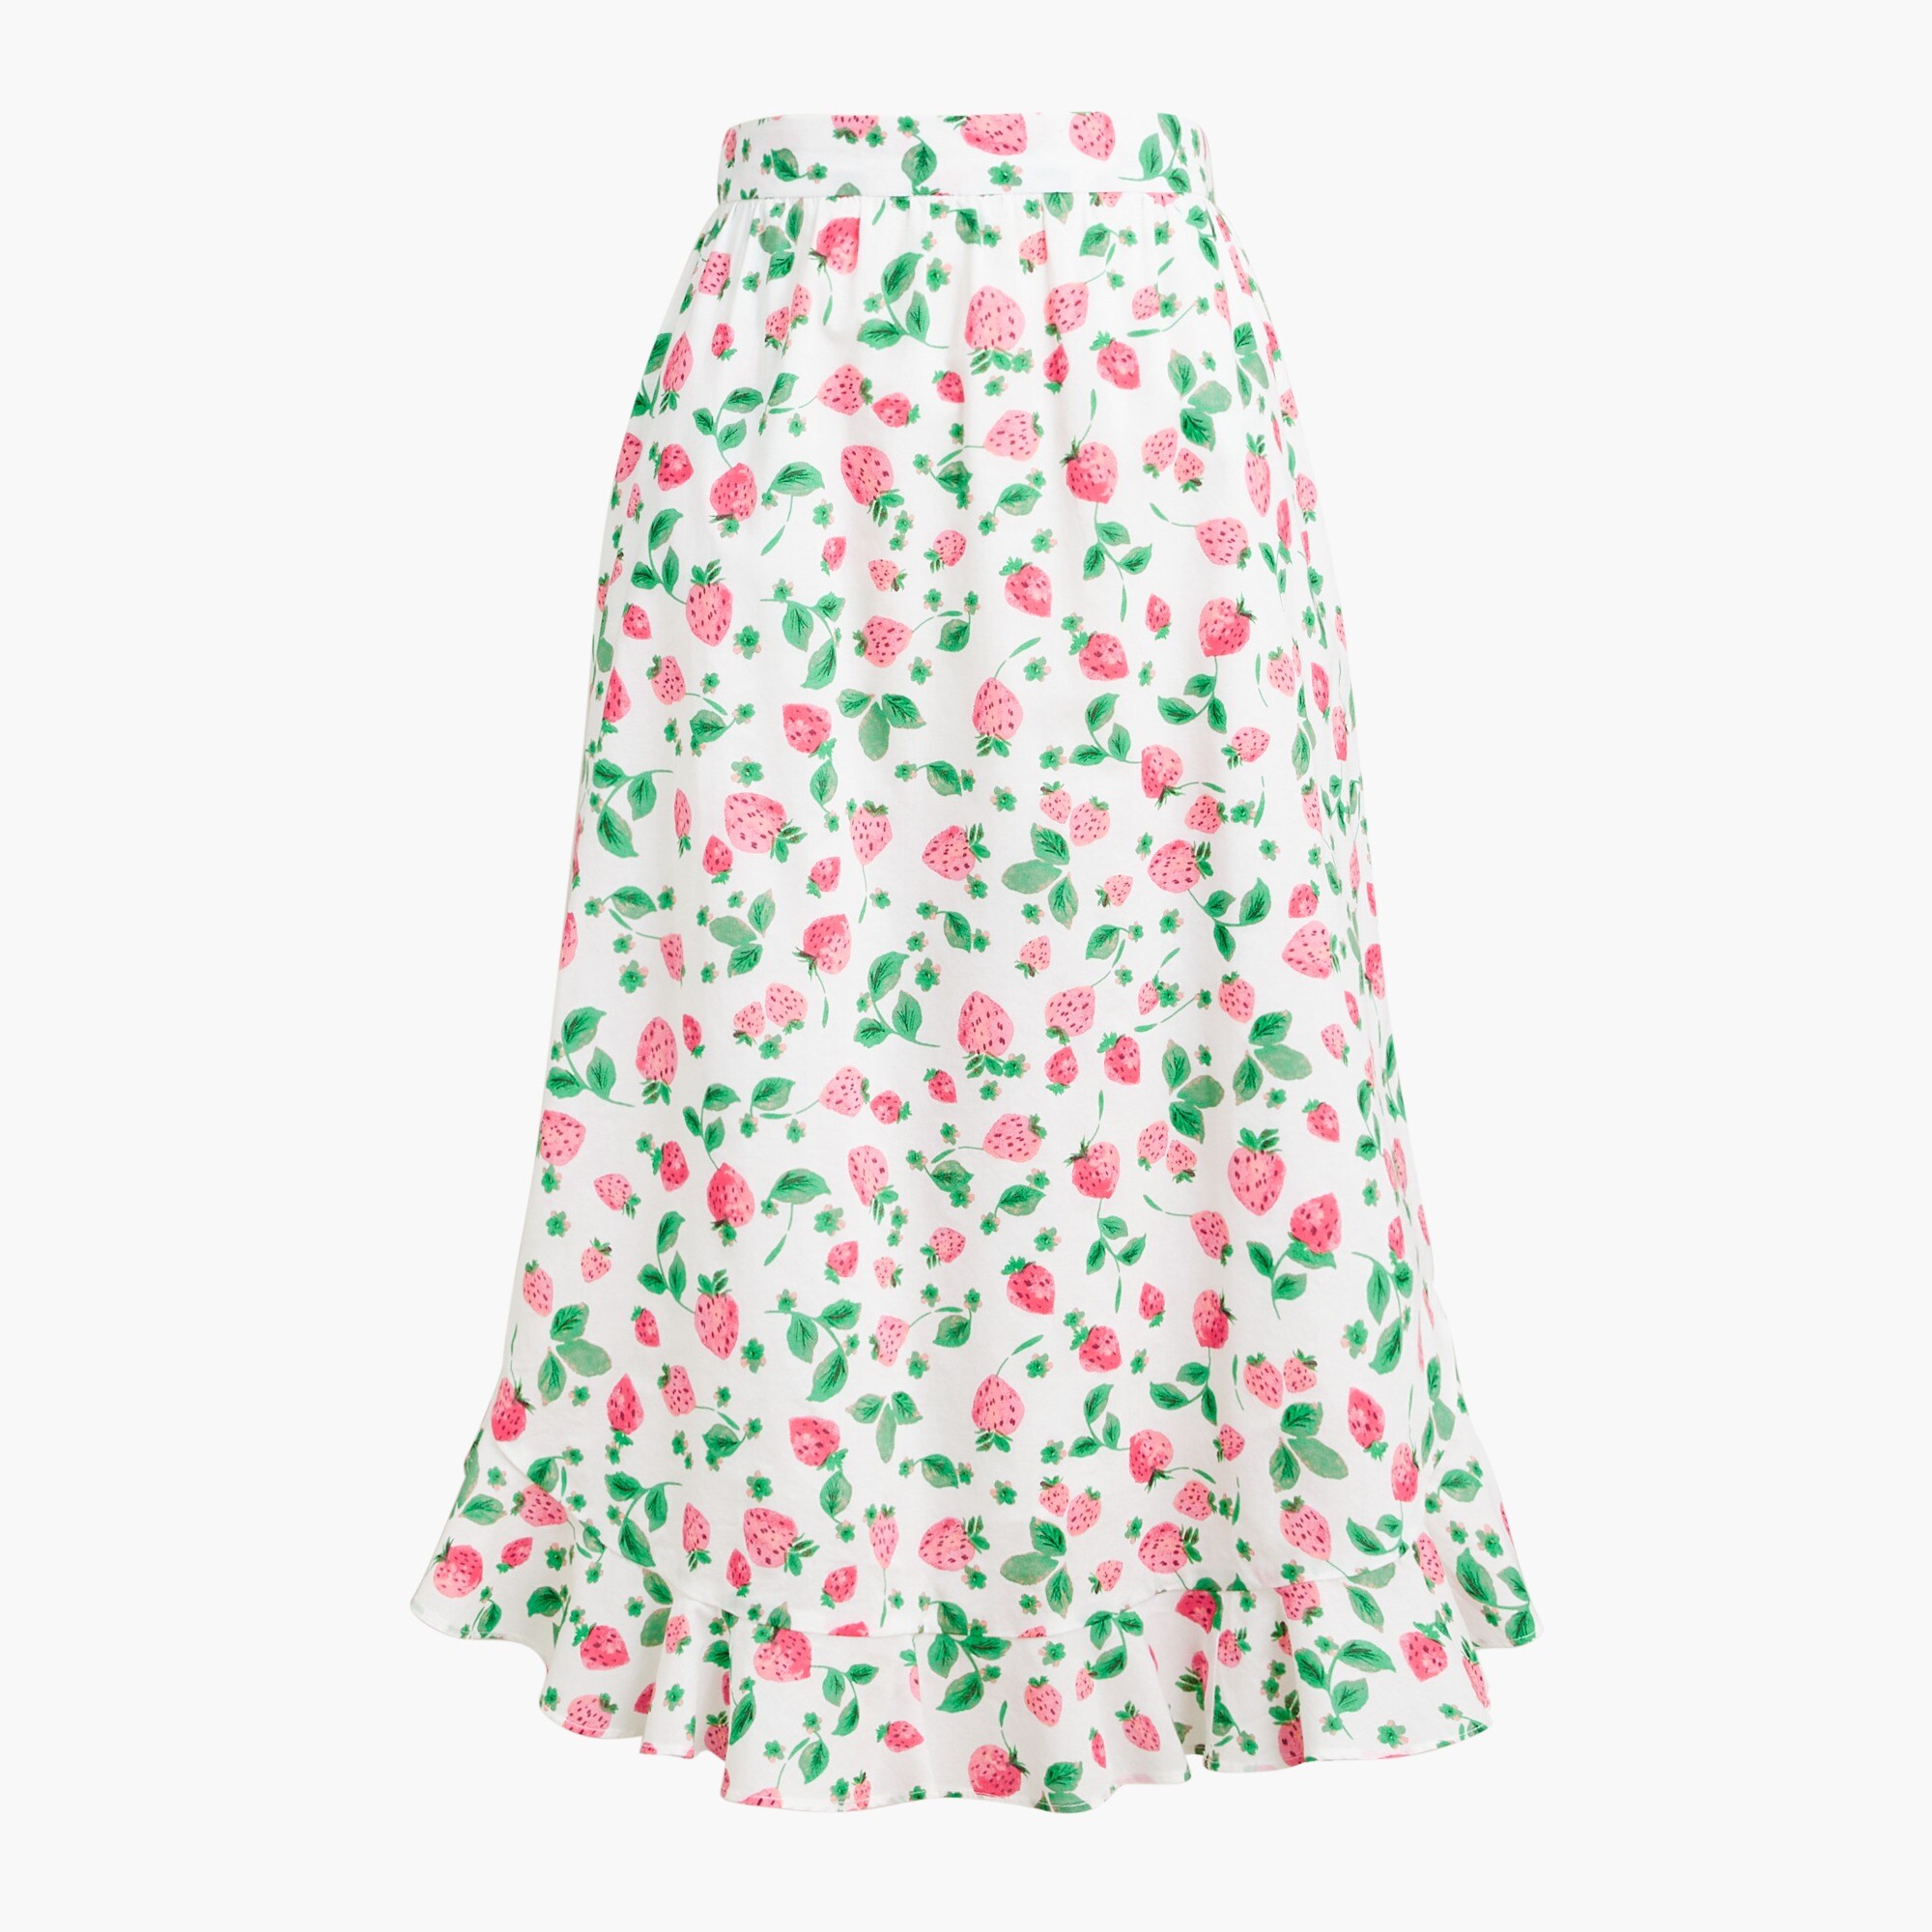  Petite midi skirt with flounce hem